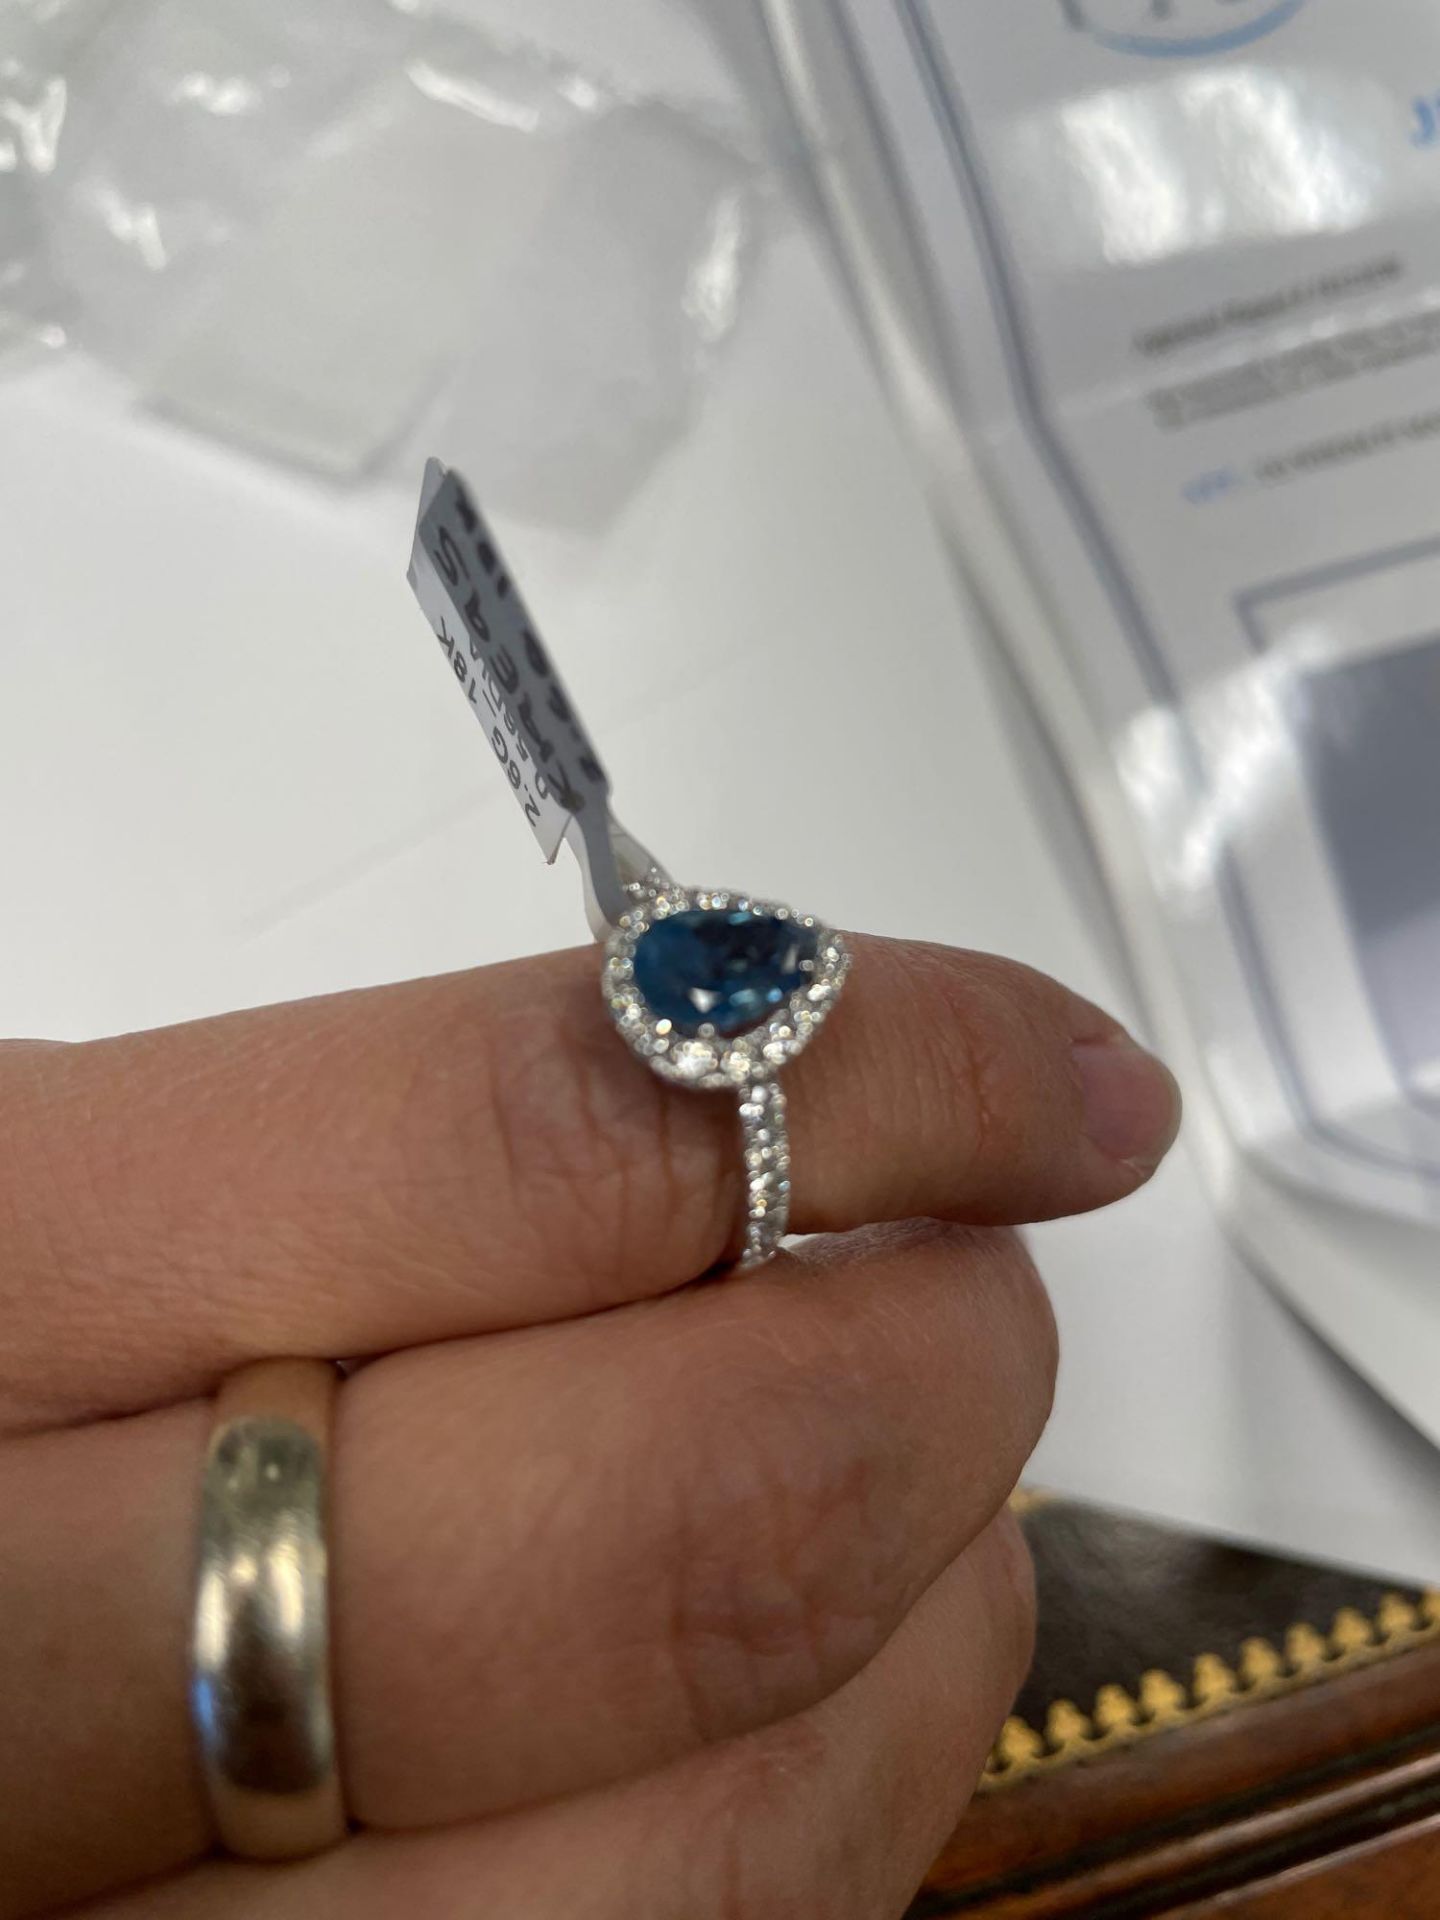 Rare Dark aquamarine and diamond ring, rare dark color from the Tatu Mine in Brazil - Image 2 of 7